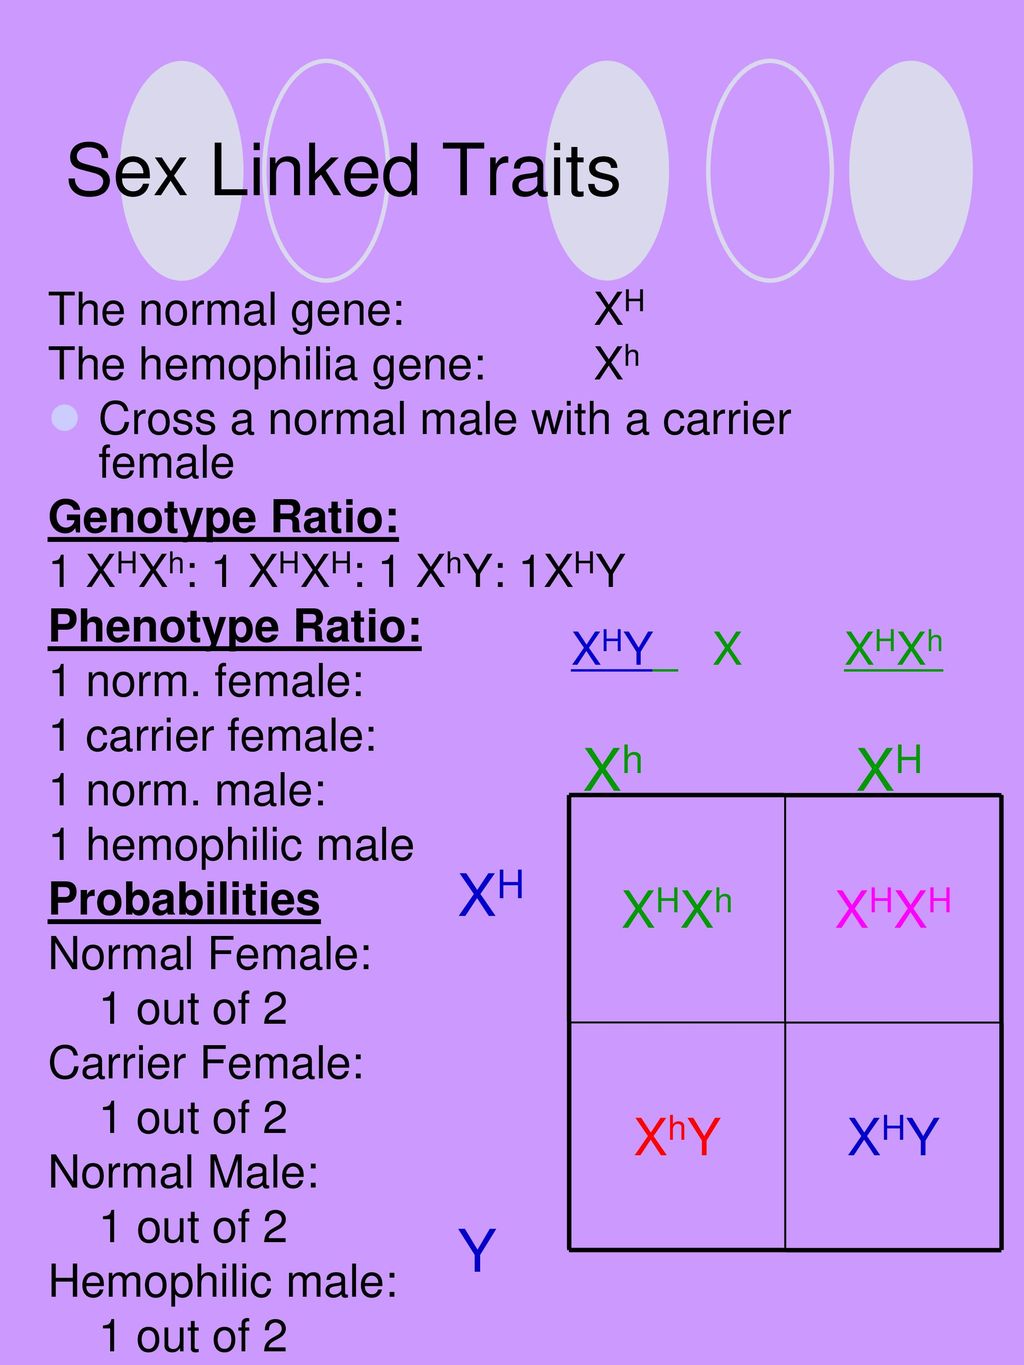 Sex Linked Traits Xh XH XH Y XHY XhY XHXH XHXh The normal gene: XH.